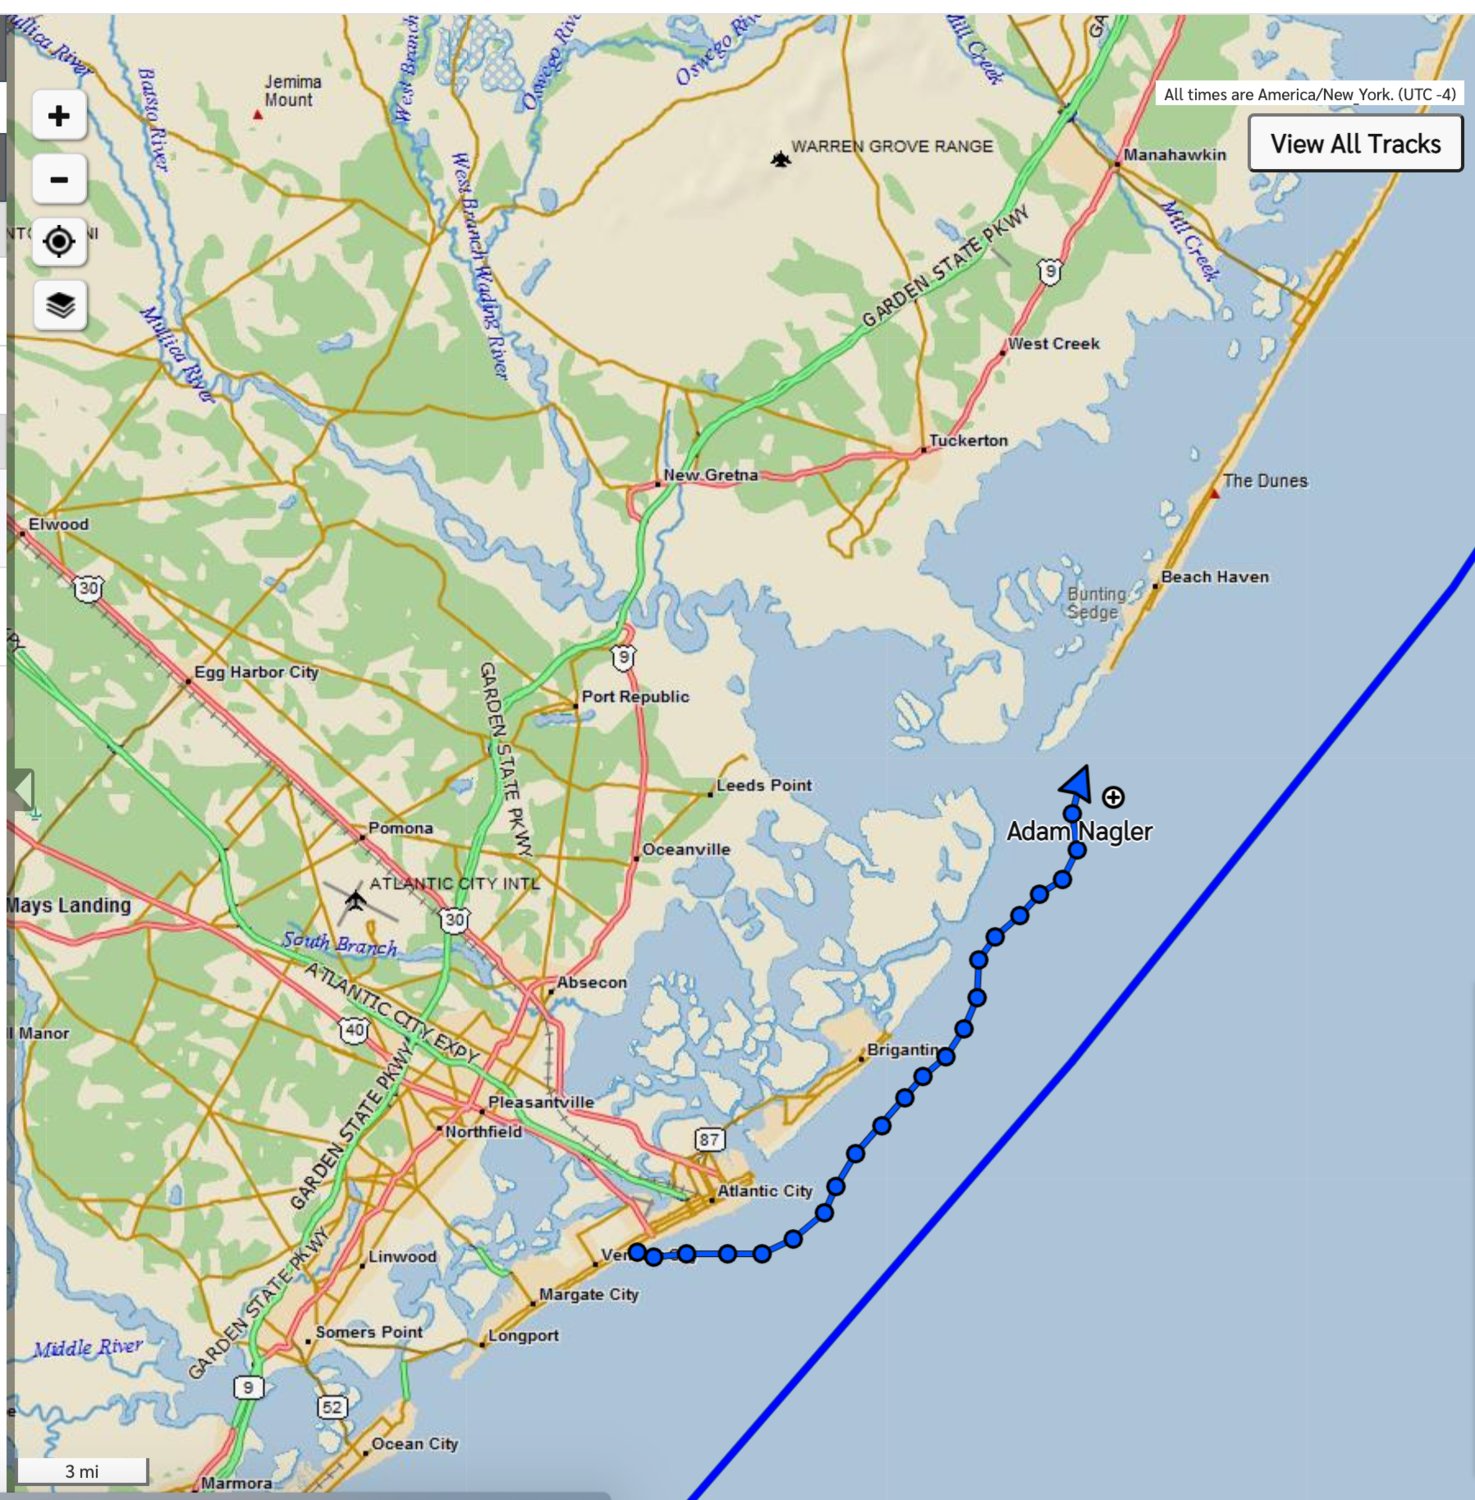 Adam Nagler's paddle-board progress toward Nantucket.